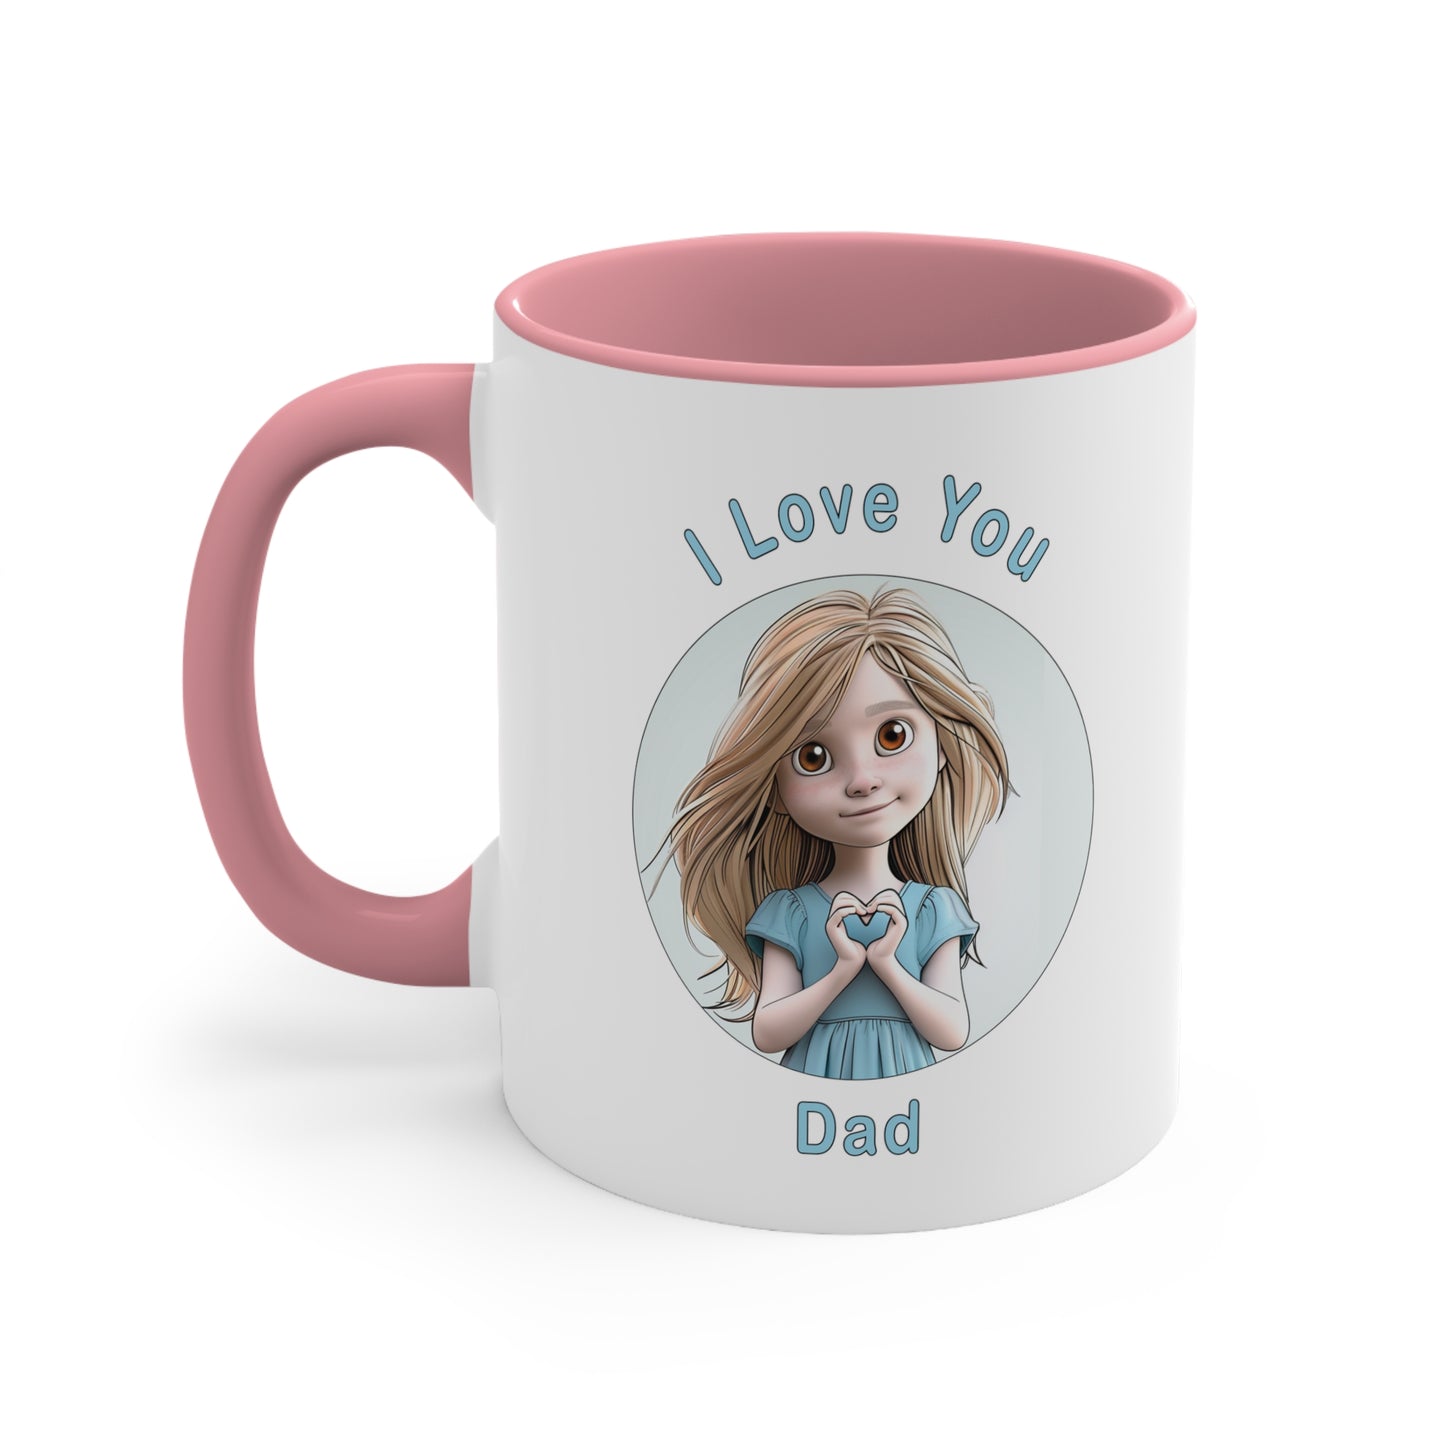 I love You Dad Coffee Mug, 11oz